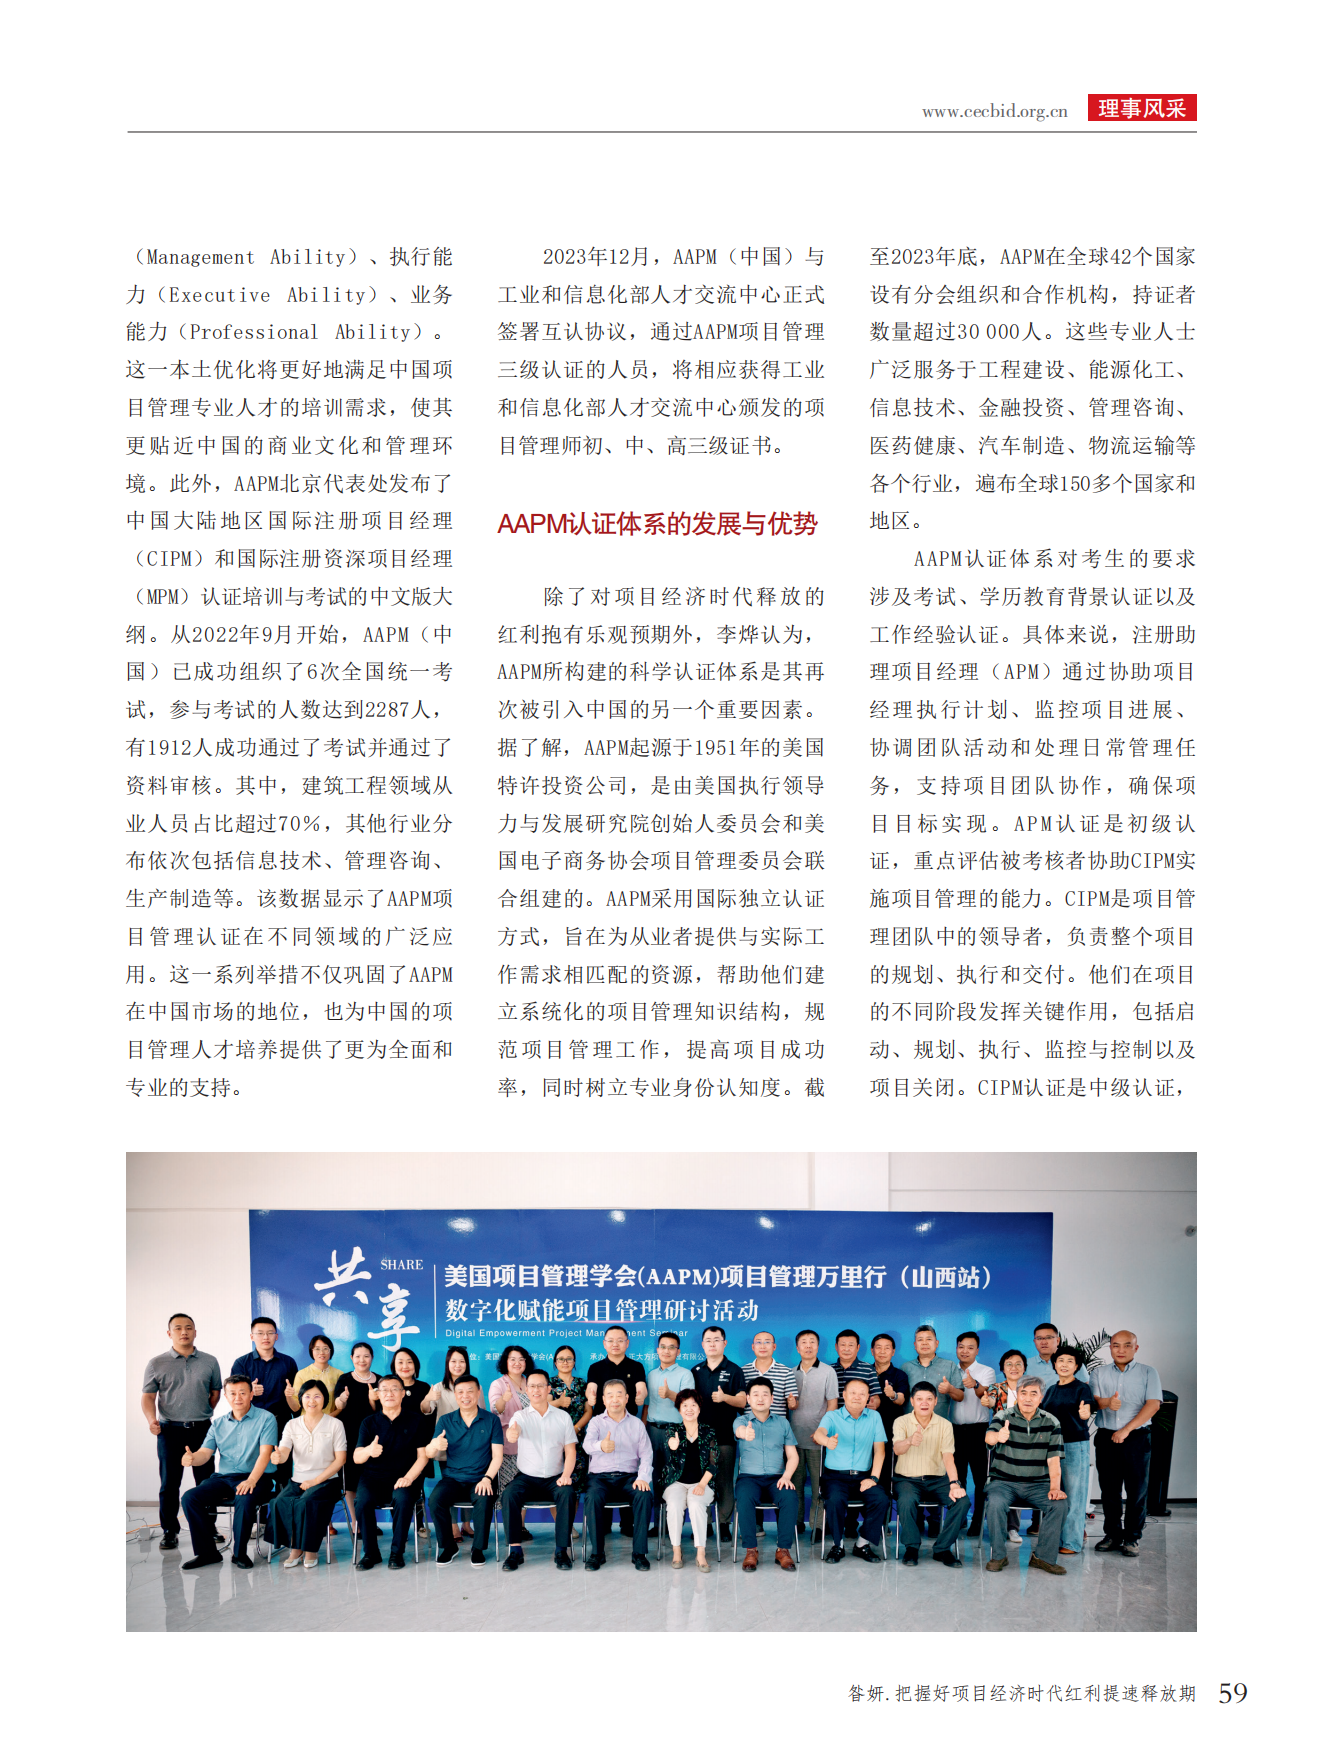 AAPM（中国）总裁李烨接受《中国招标》杂志社采访